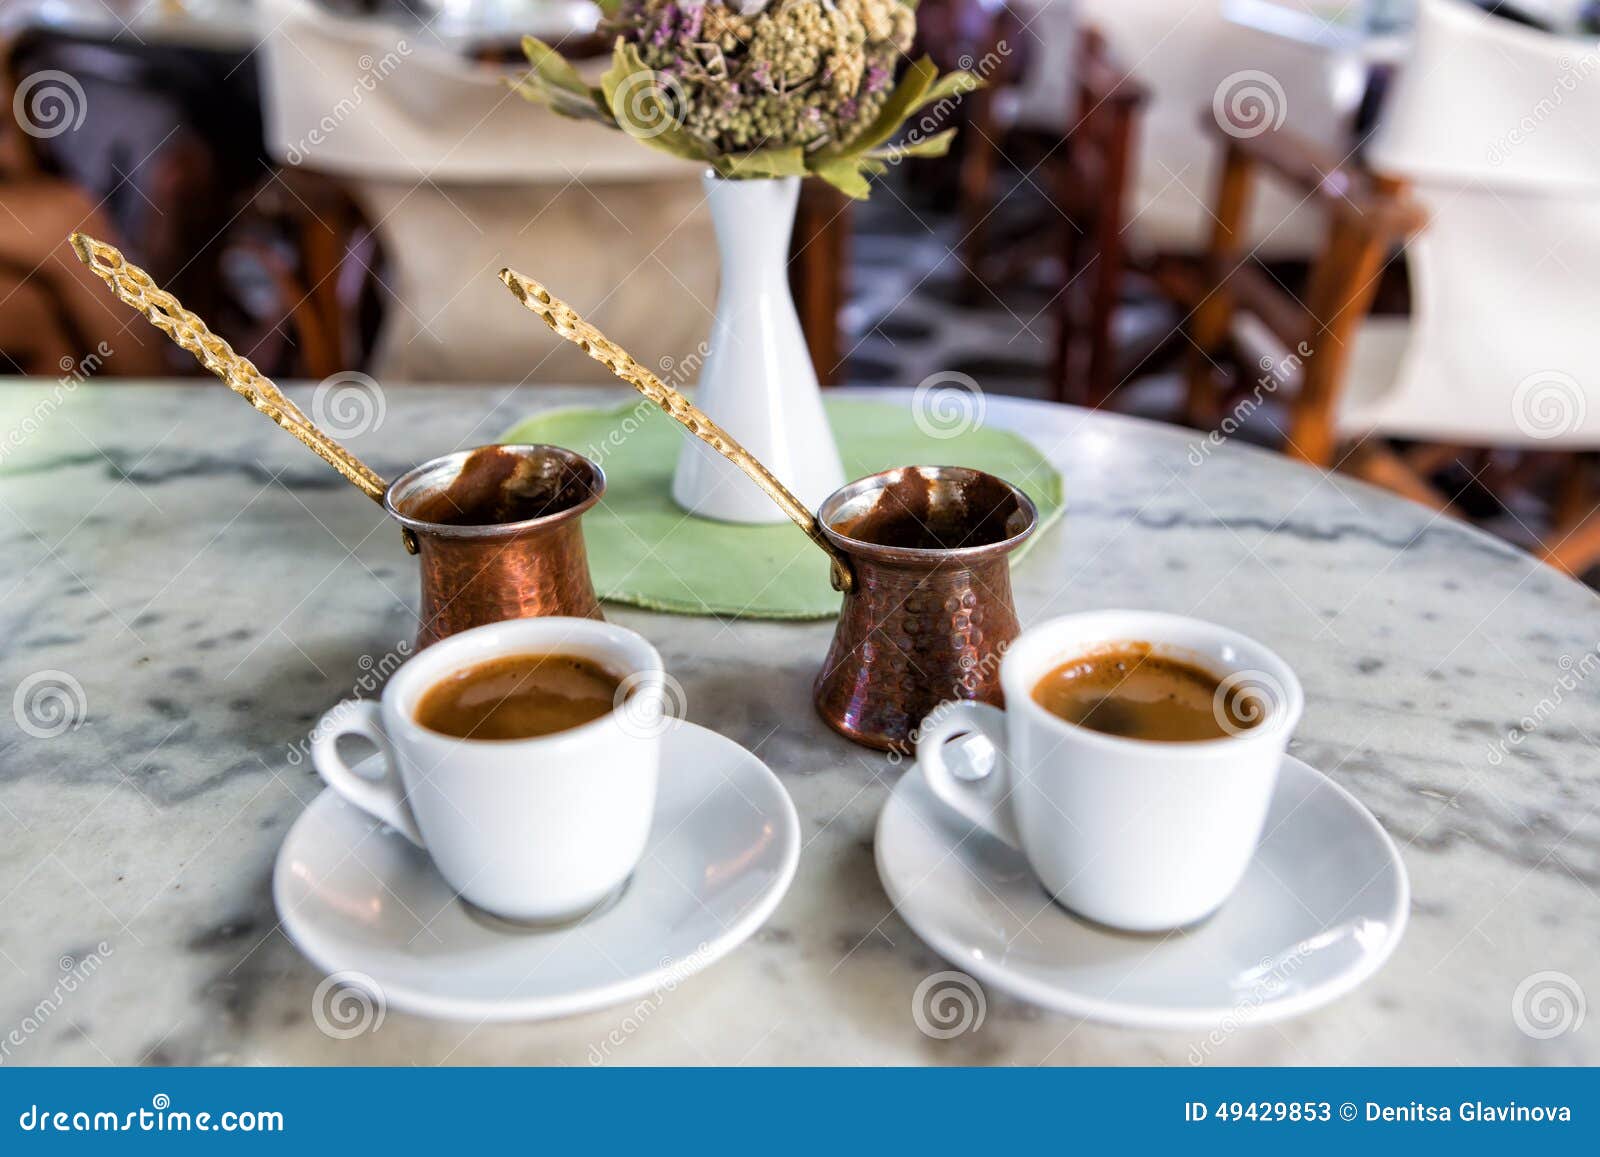 https://thumbs.dreamstime.com/z/traditional-greek-coffee-pot-coffee-cups-two-49429853.jpg